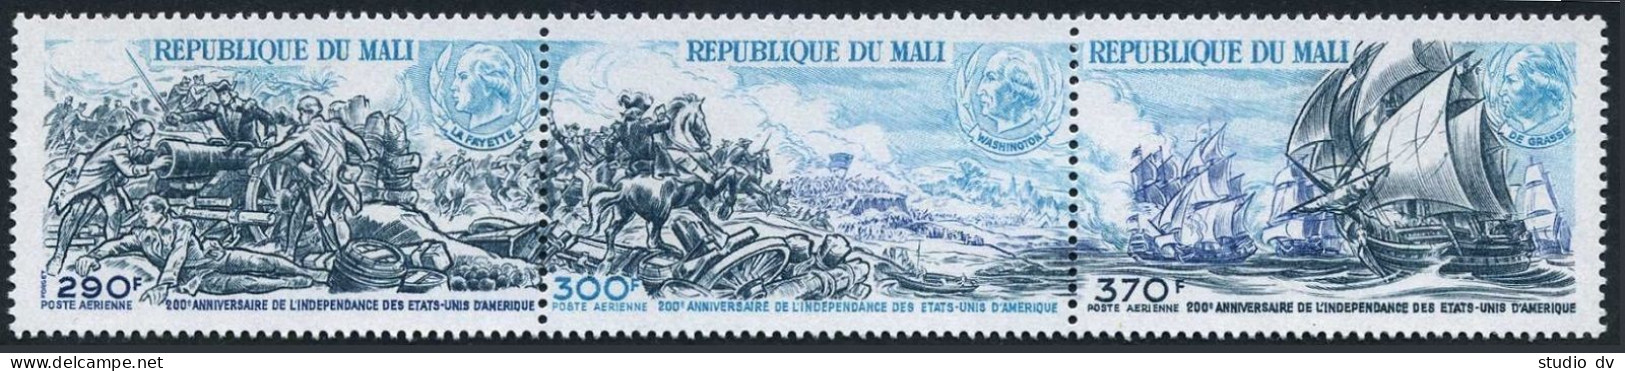 Mali C254-C256a Strip, MNH. Michel 499-501. USA-200, 1976. Battle Scenes. - Mali (1959-...)